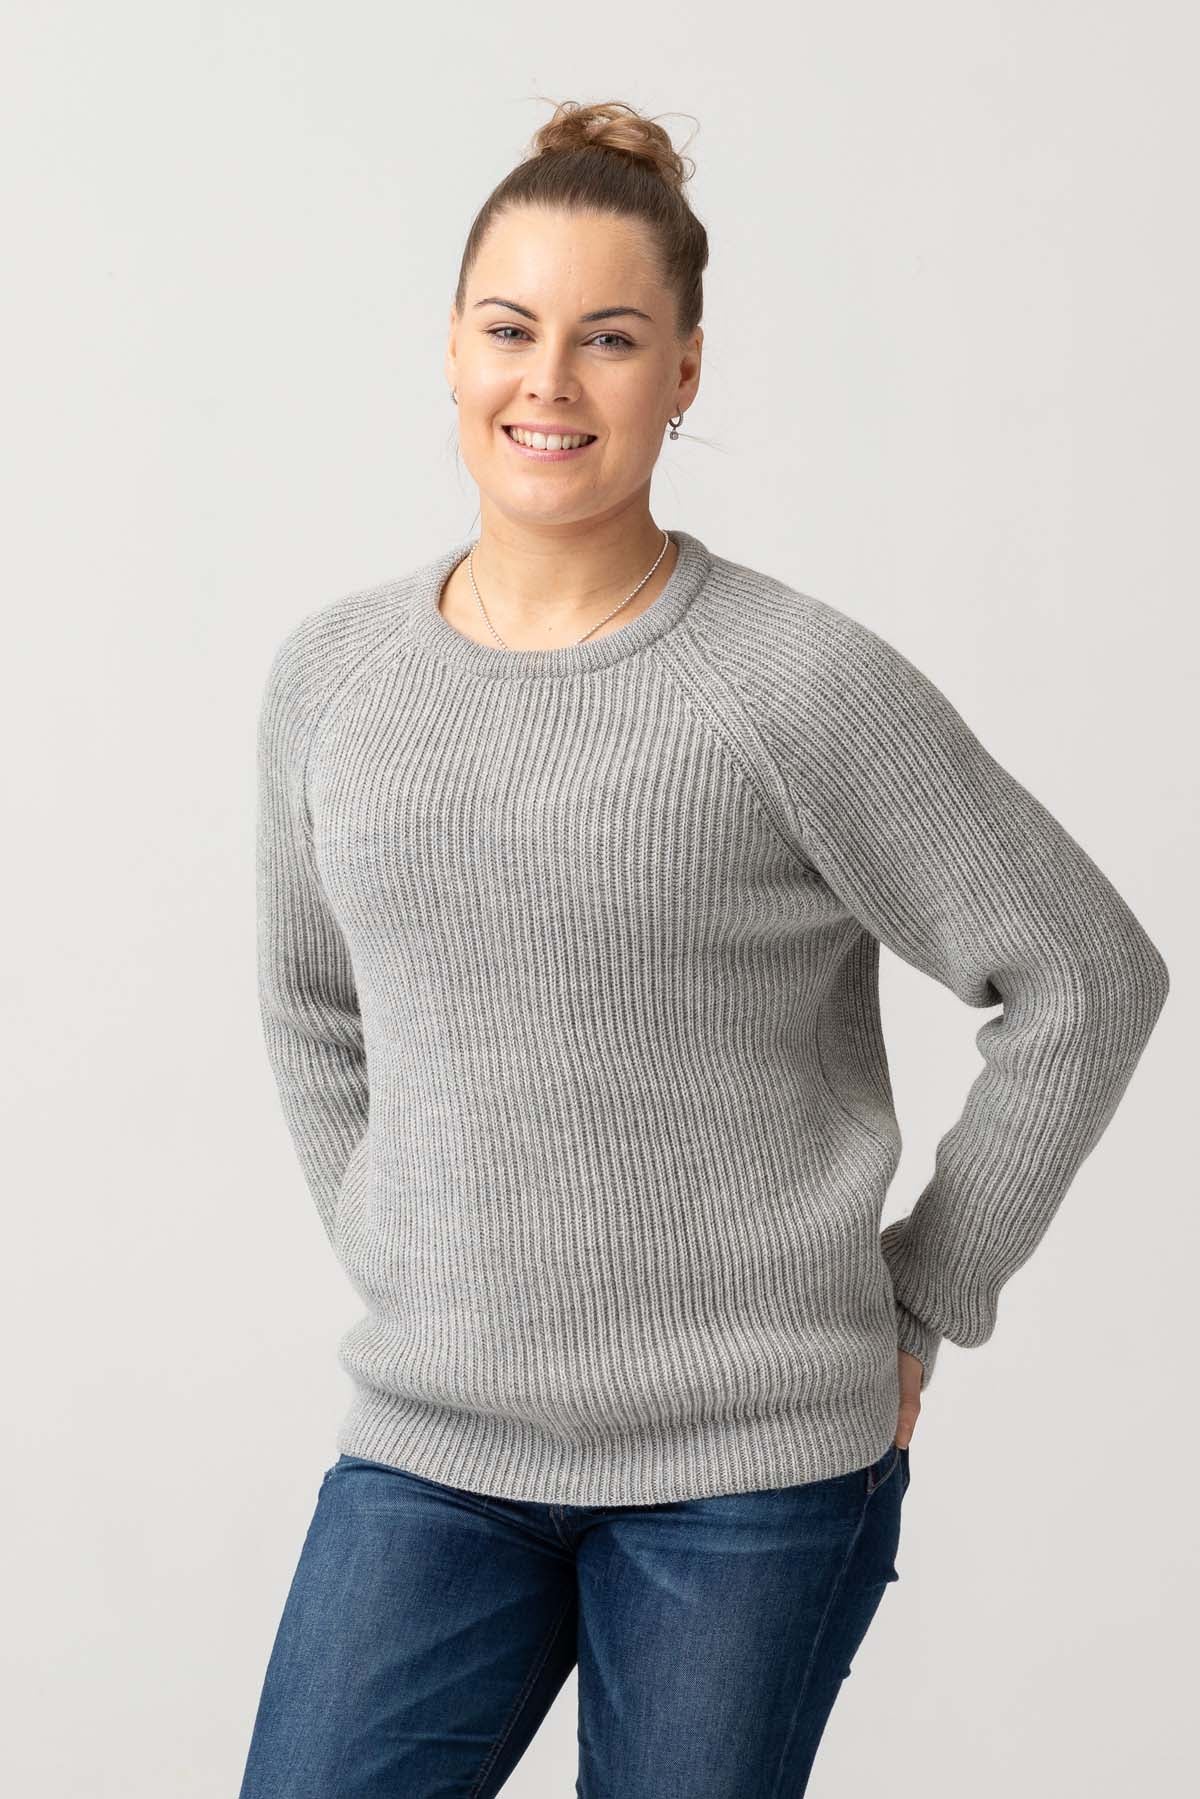 Colca sweater - light gray